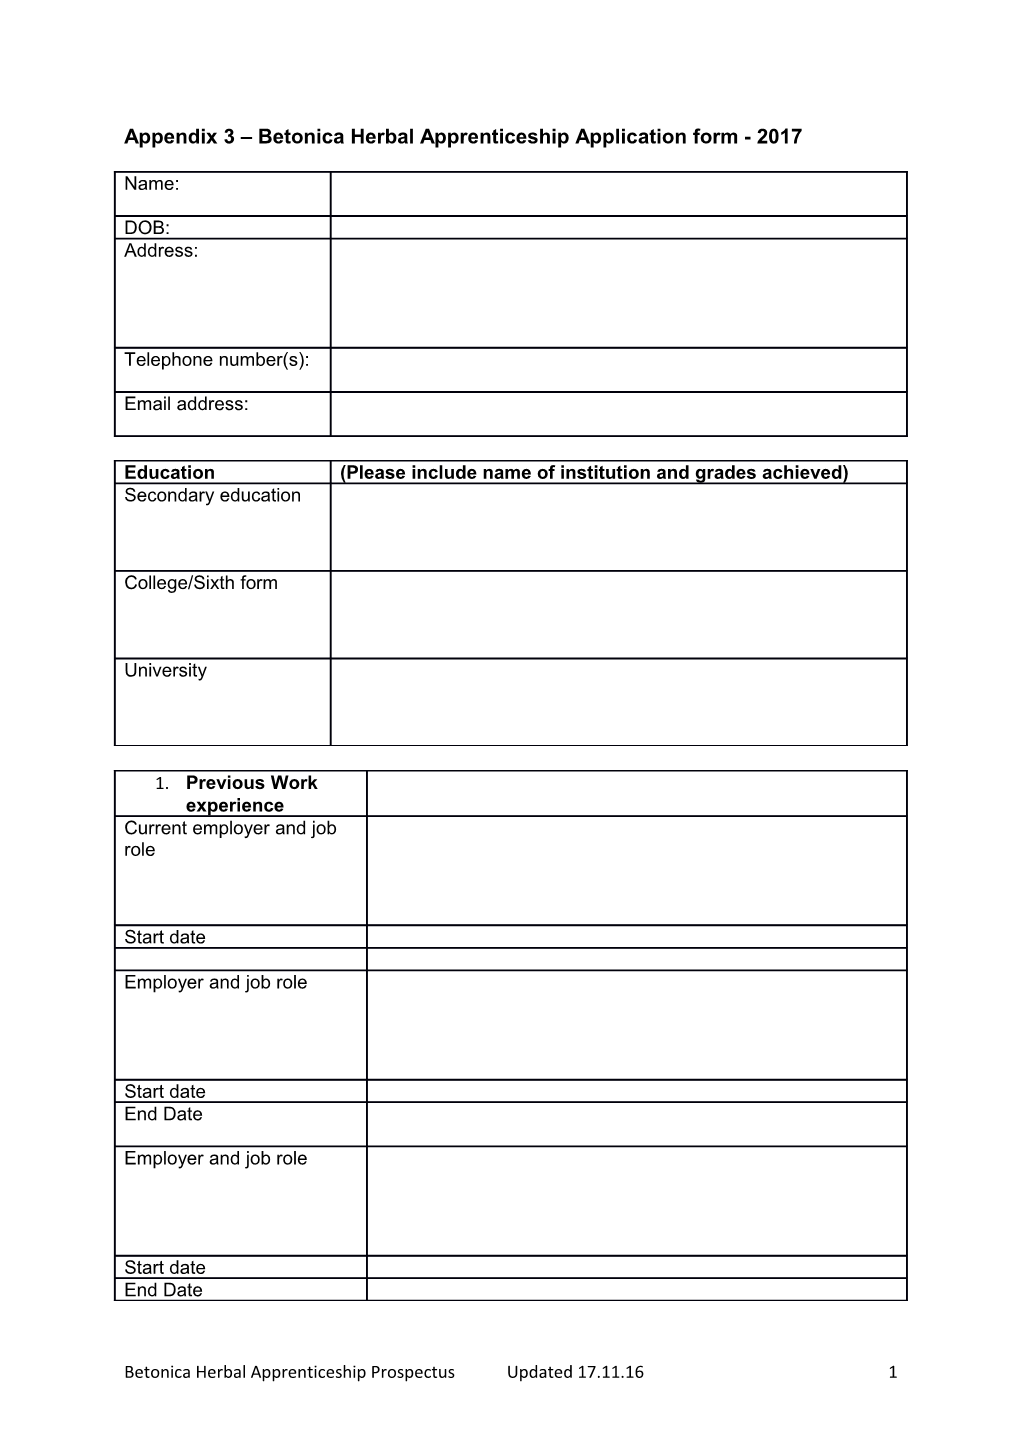 Appendix 3 Betonica Herbal Apprenticeship Application Form - 2017